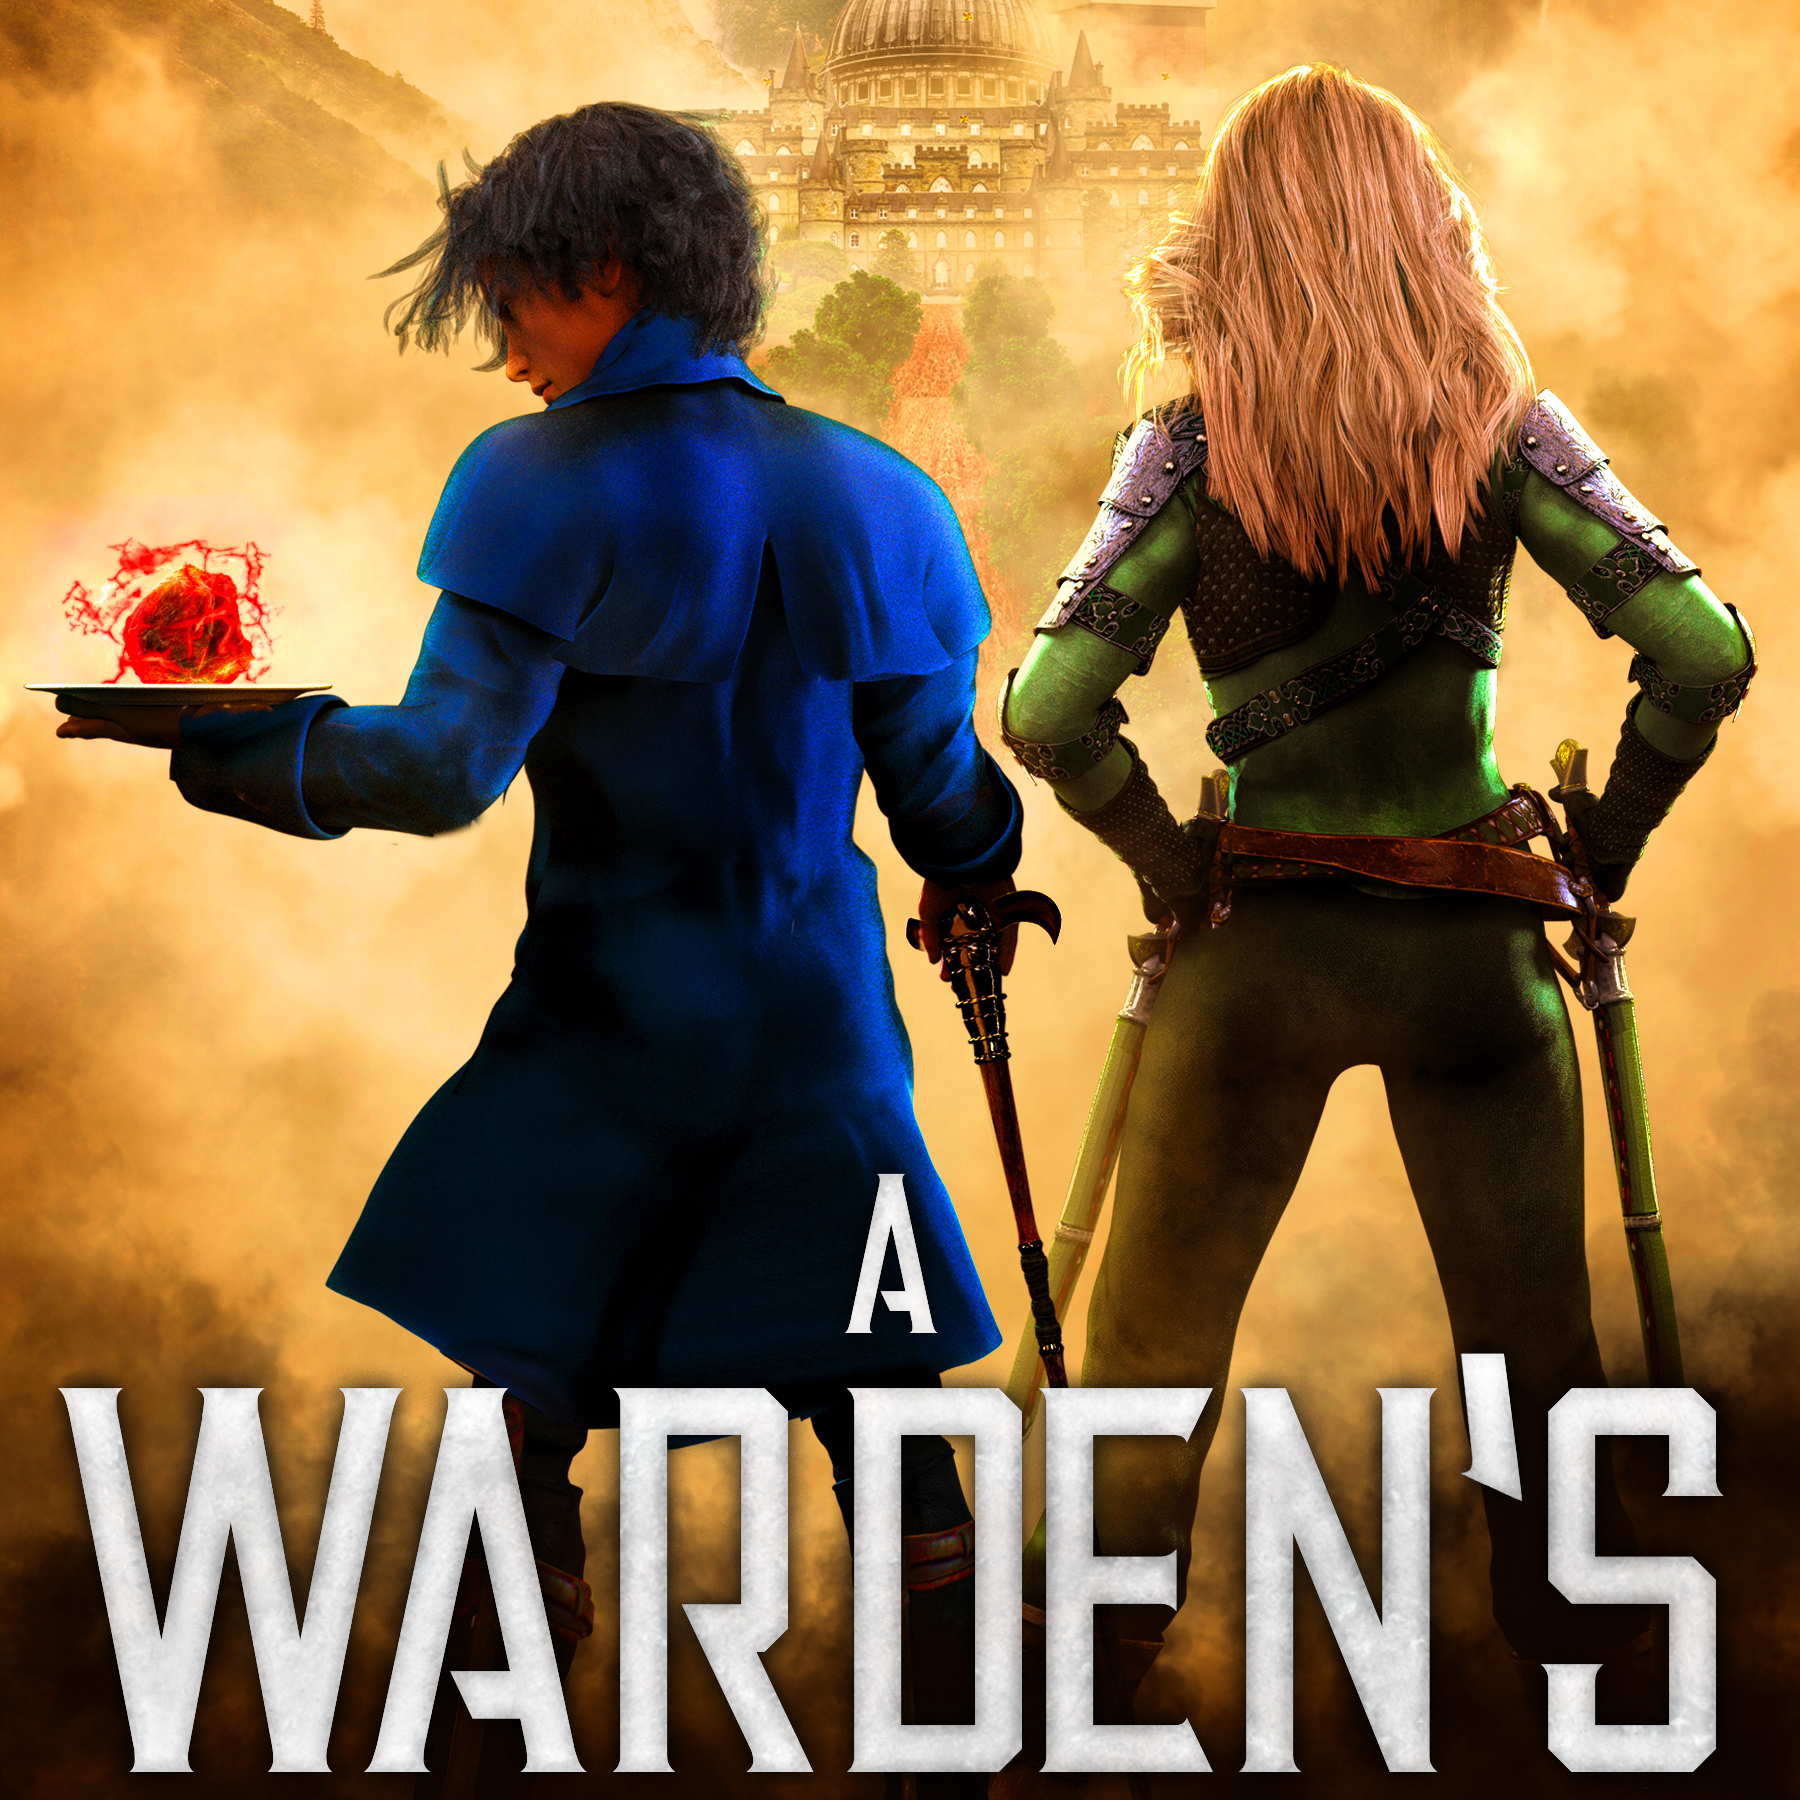 A Warden's Purpose by Jeffrey L. Kohanek